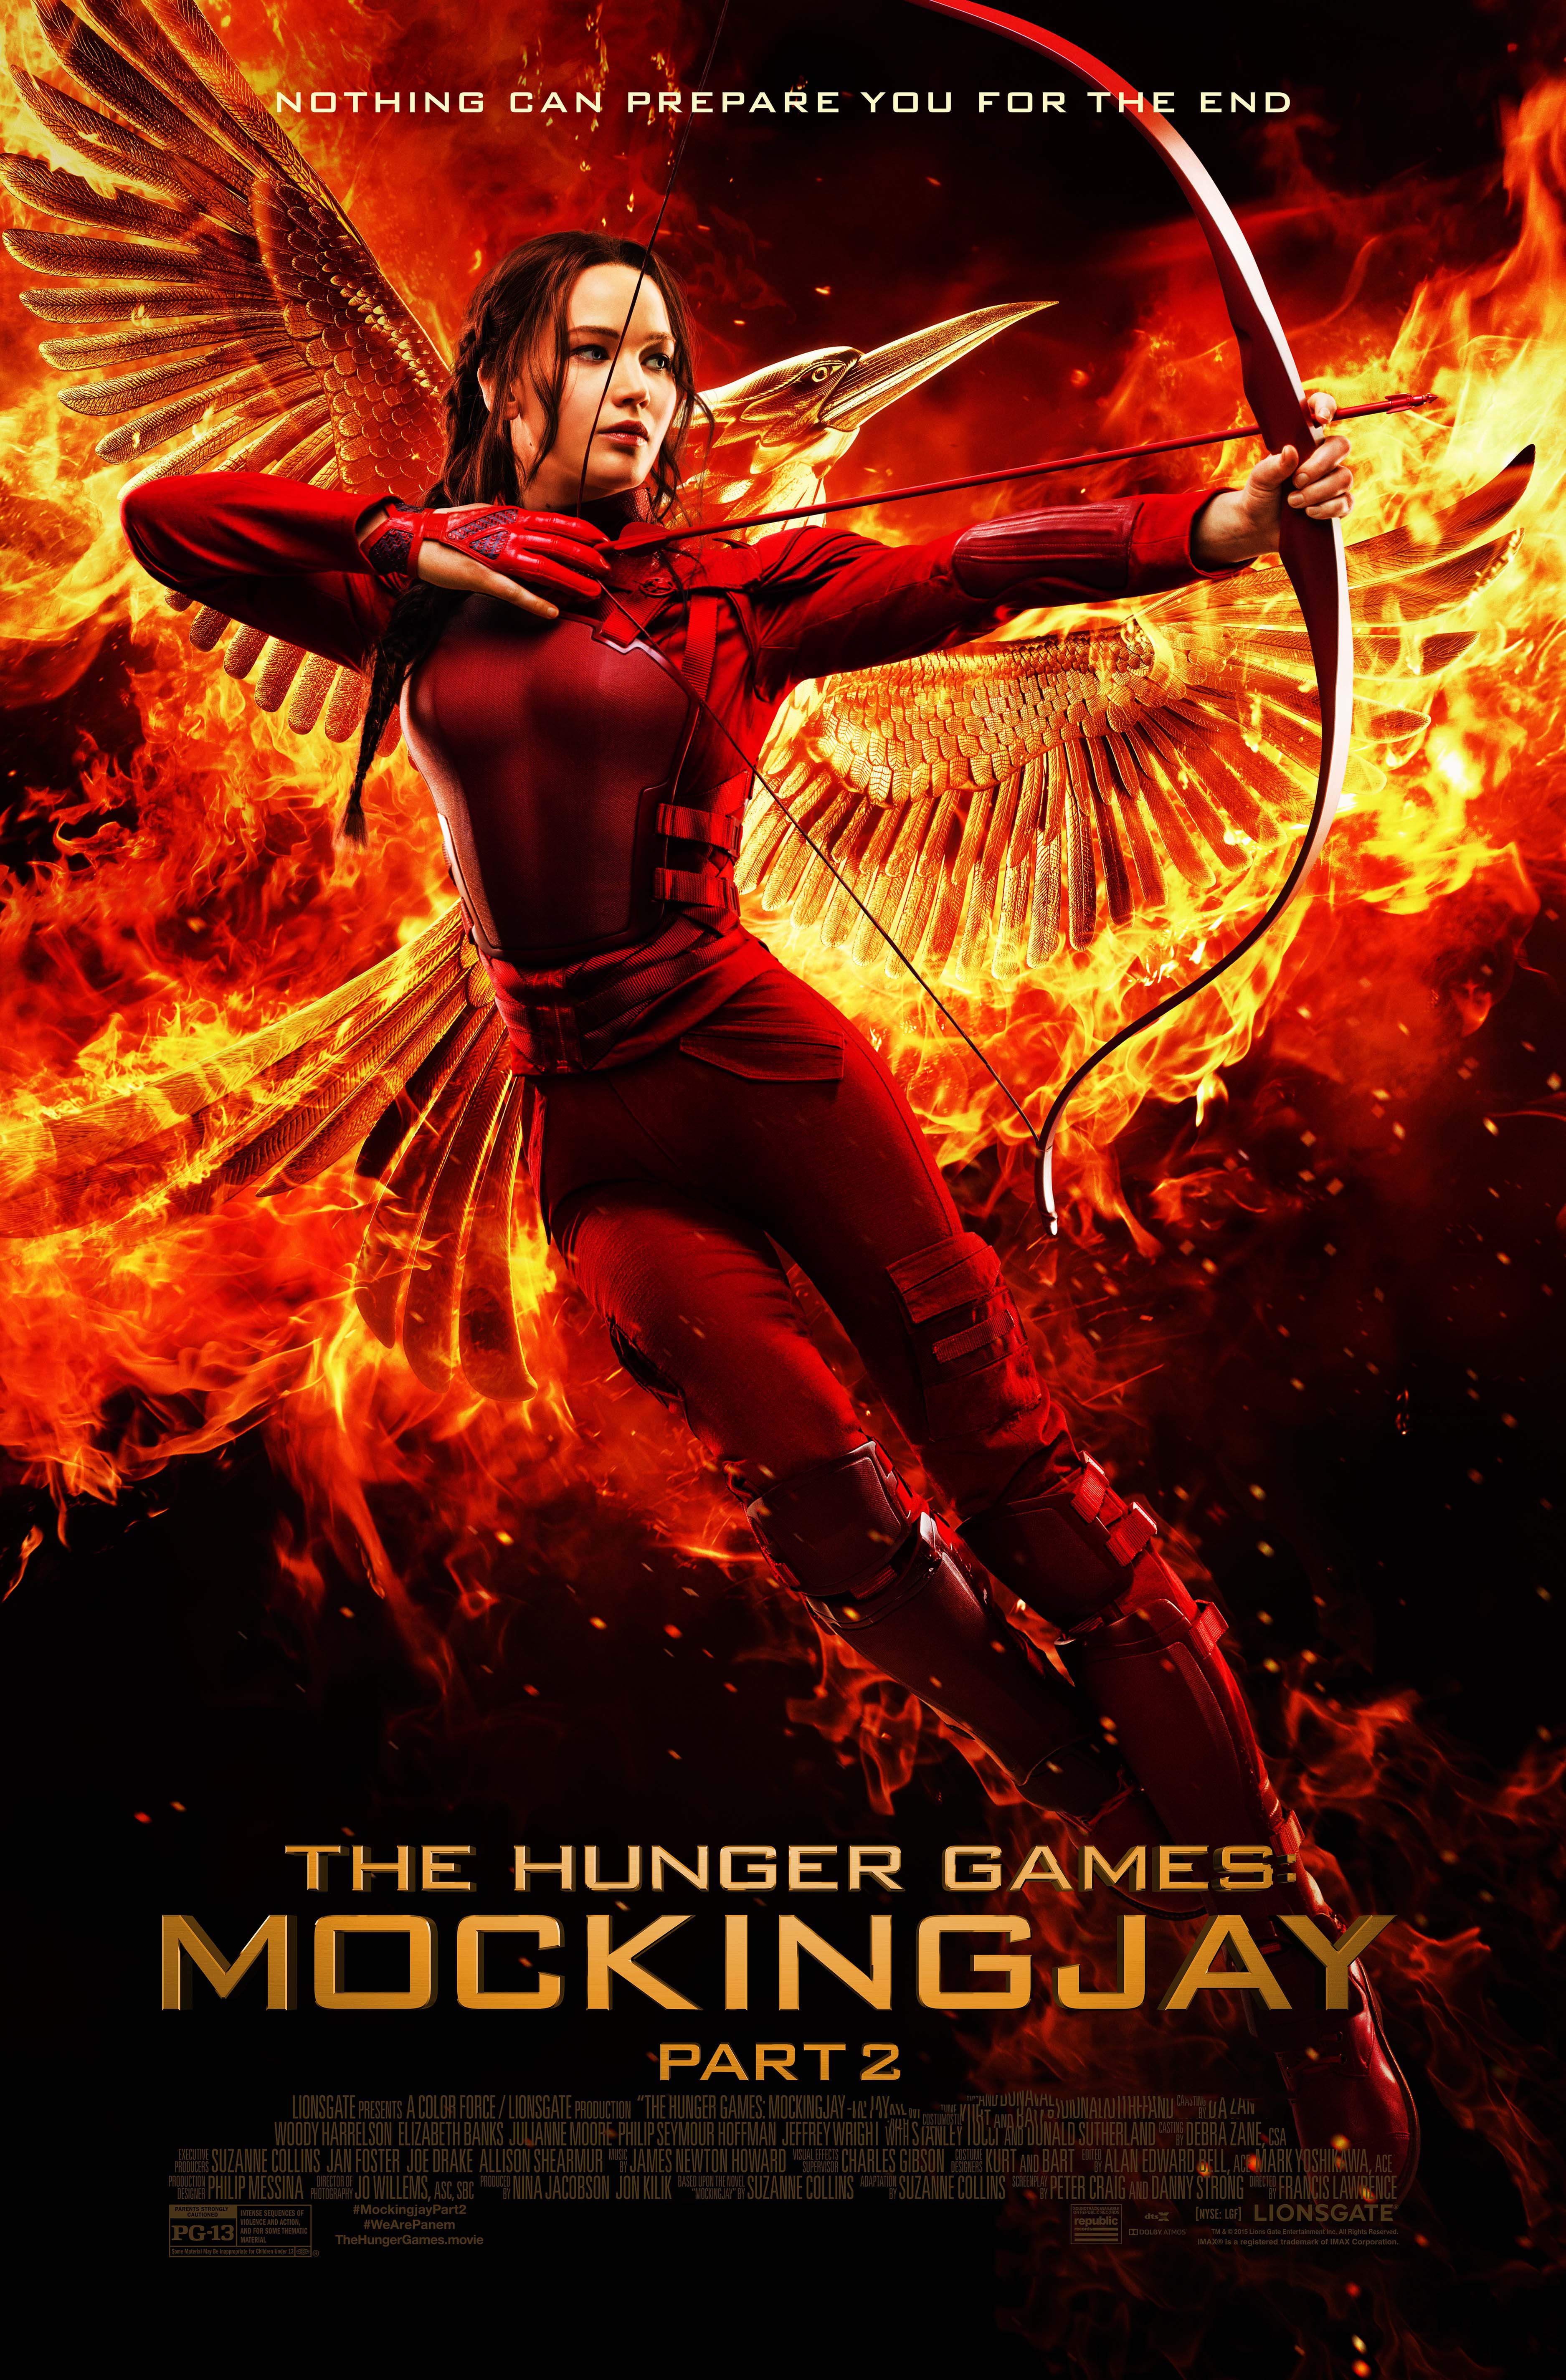 The Hunger Games: Mockingjay, Part 2 - Full Cast & Crew